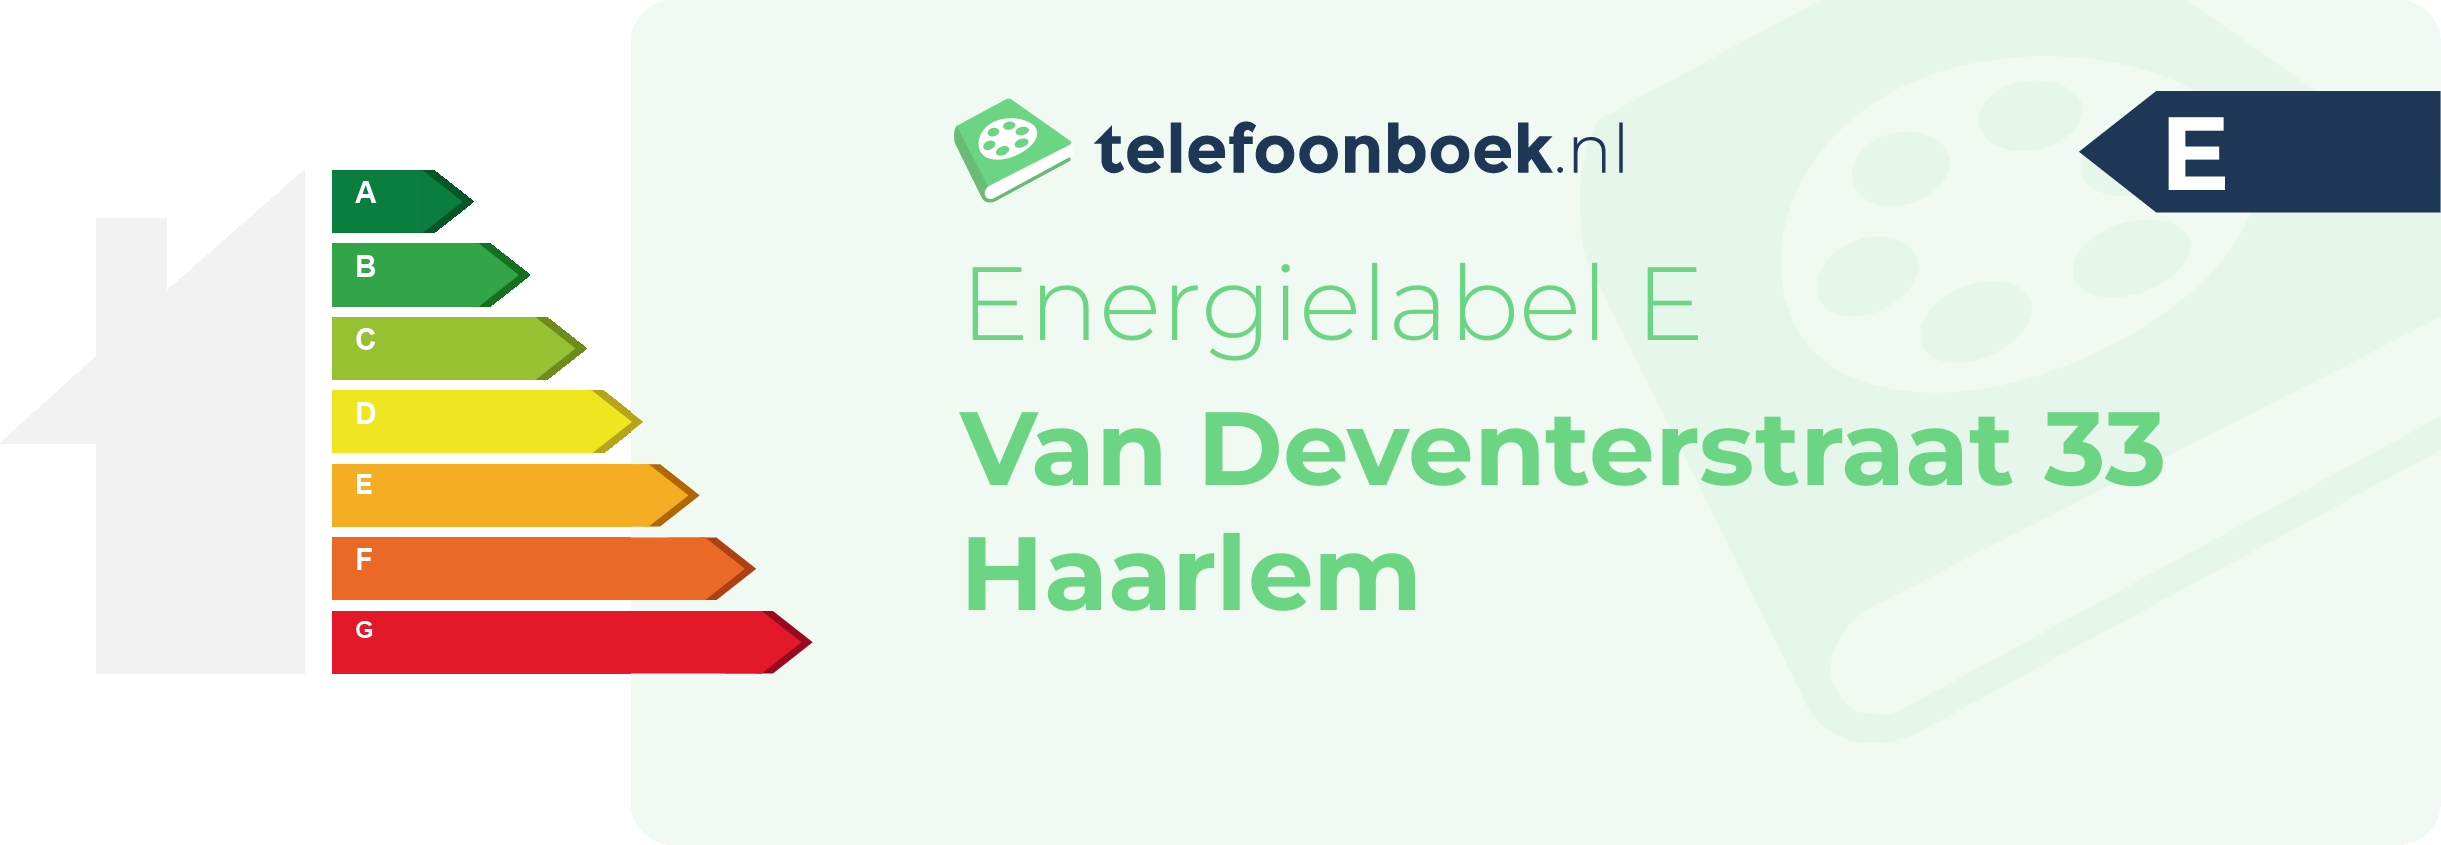 Energielabel Van Deventerstraat 33 Haarlem